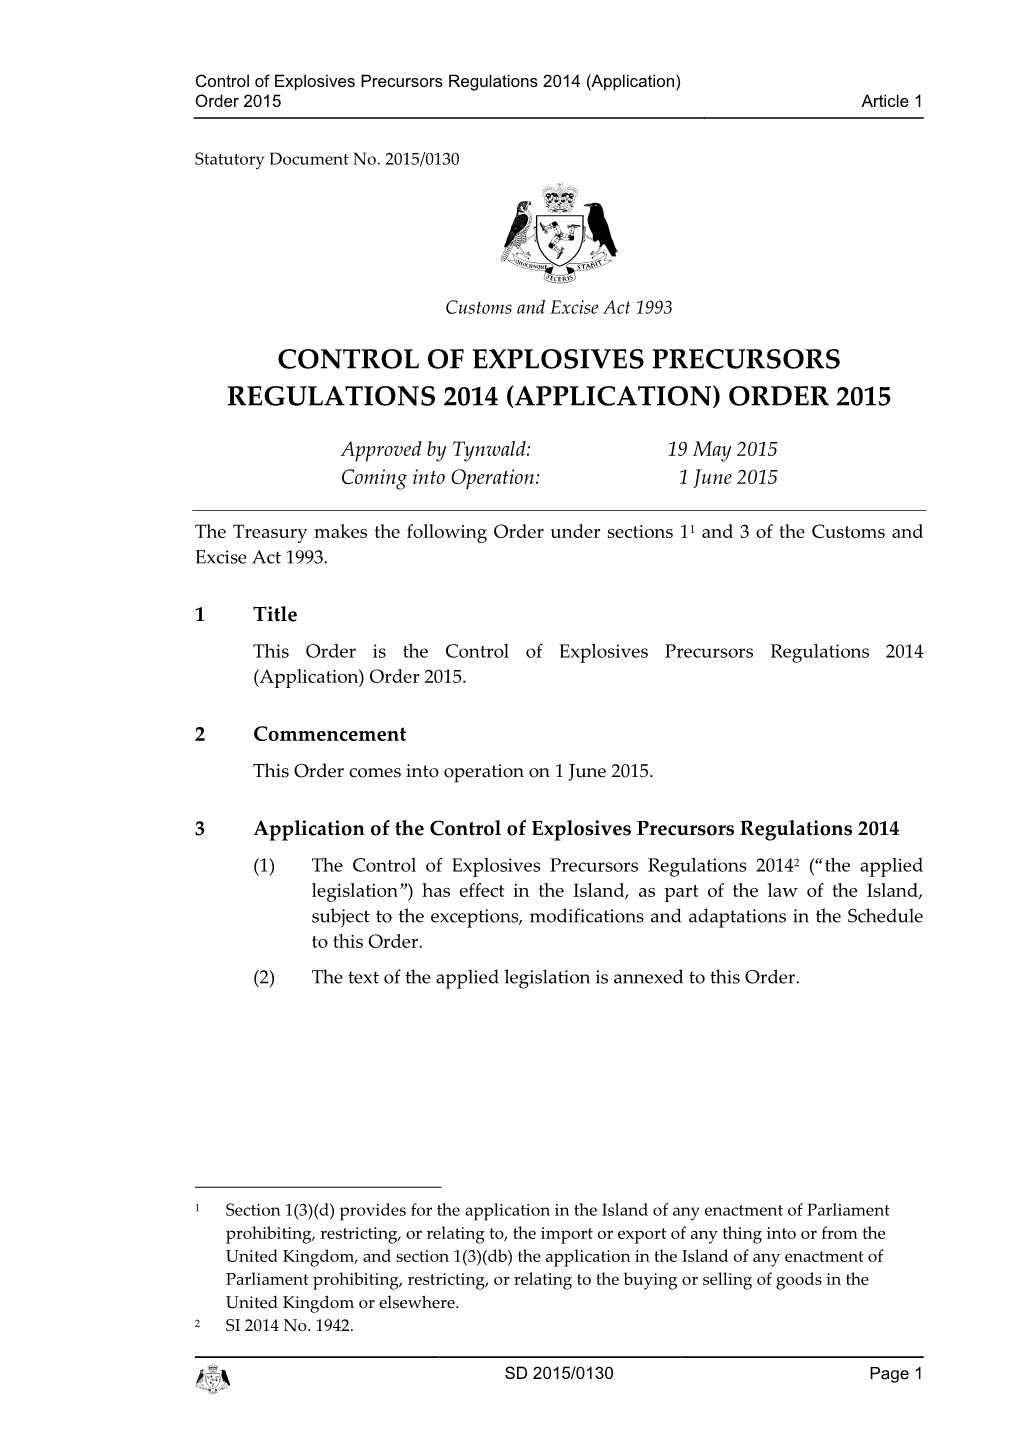 Control of Explosives Precursors Regulations 2014 (Application) Order 2015 Article 1